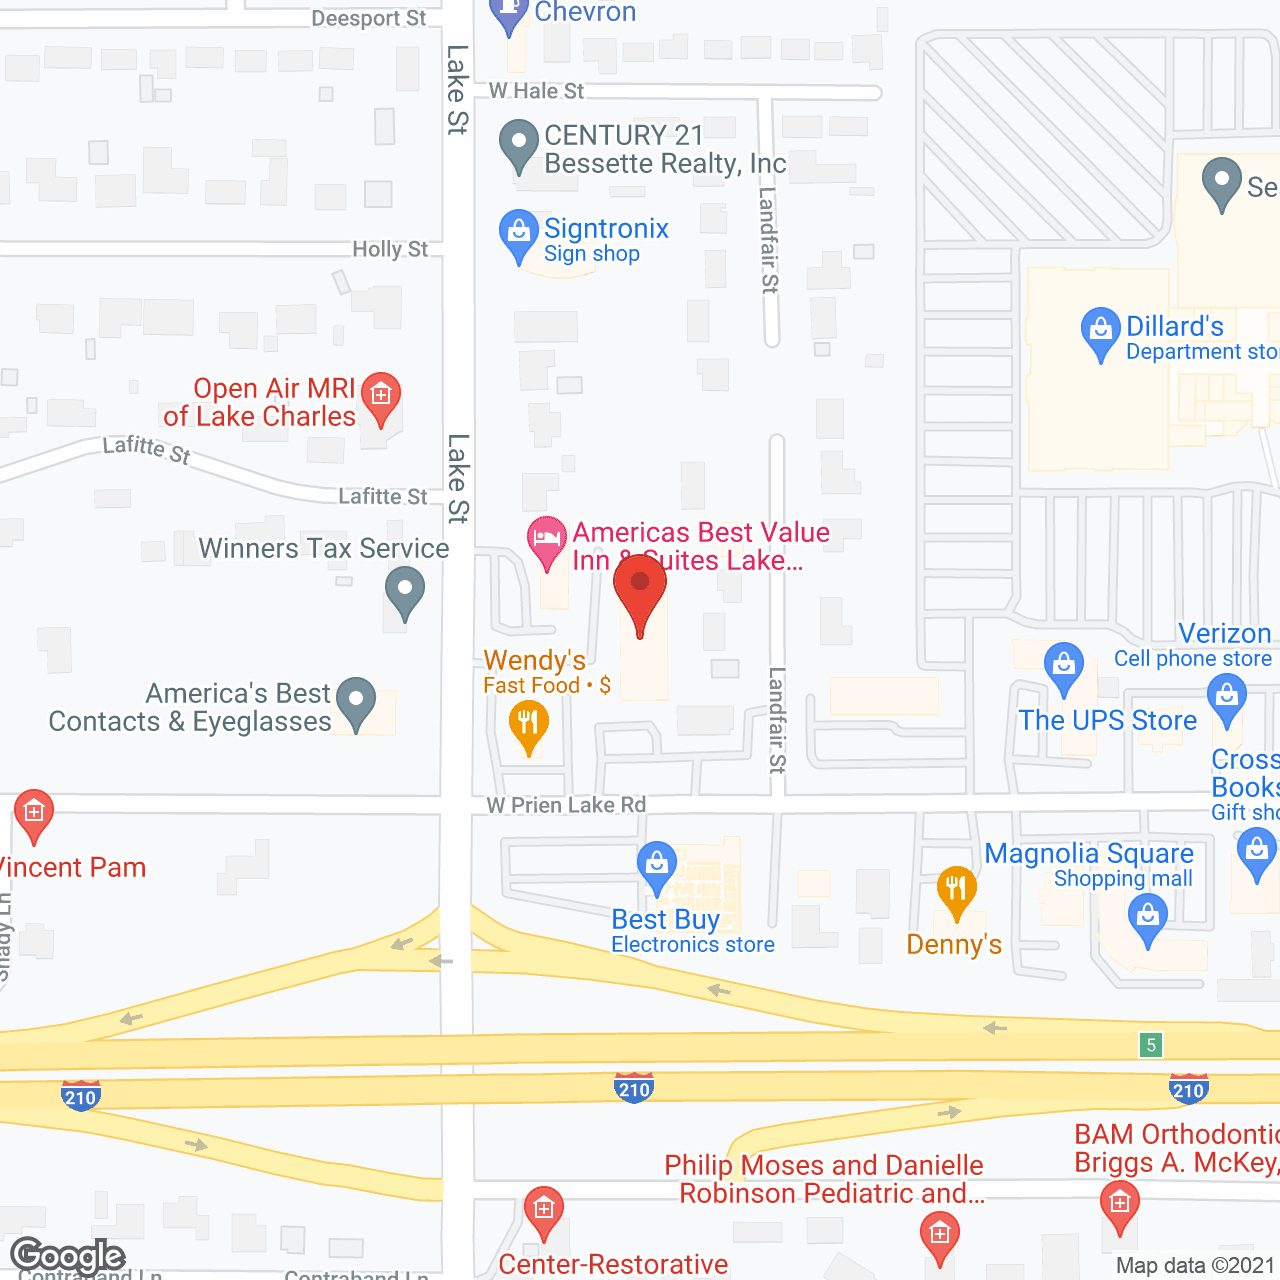 Home Instead - Lake Charles, LA in google map